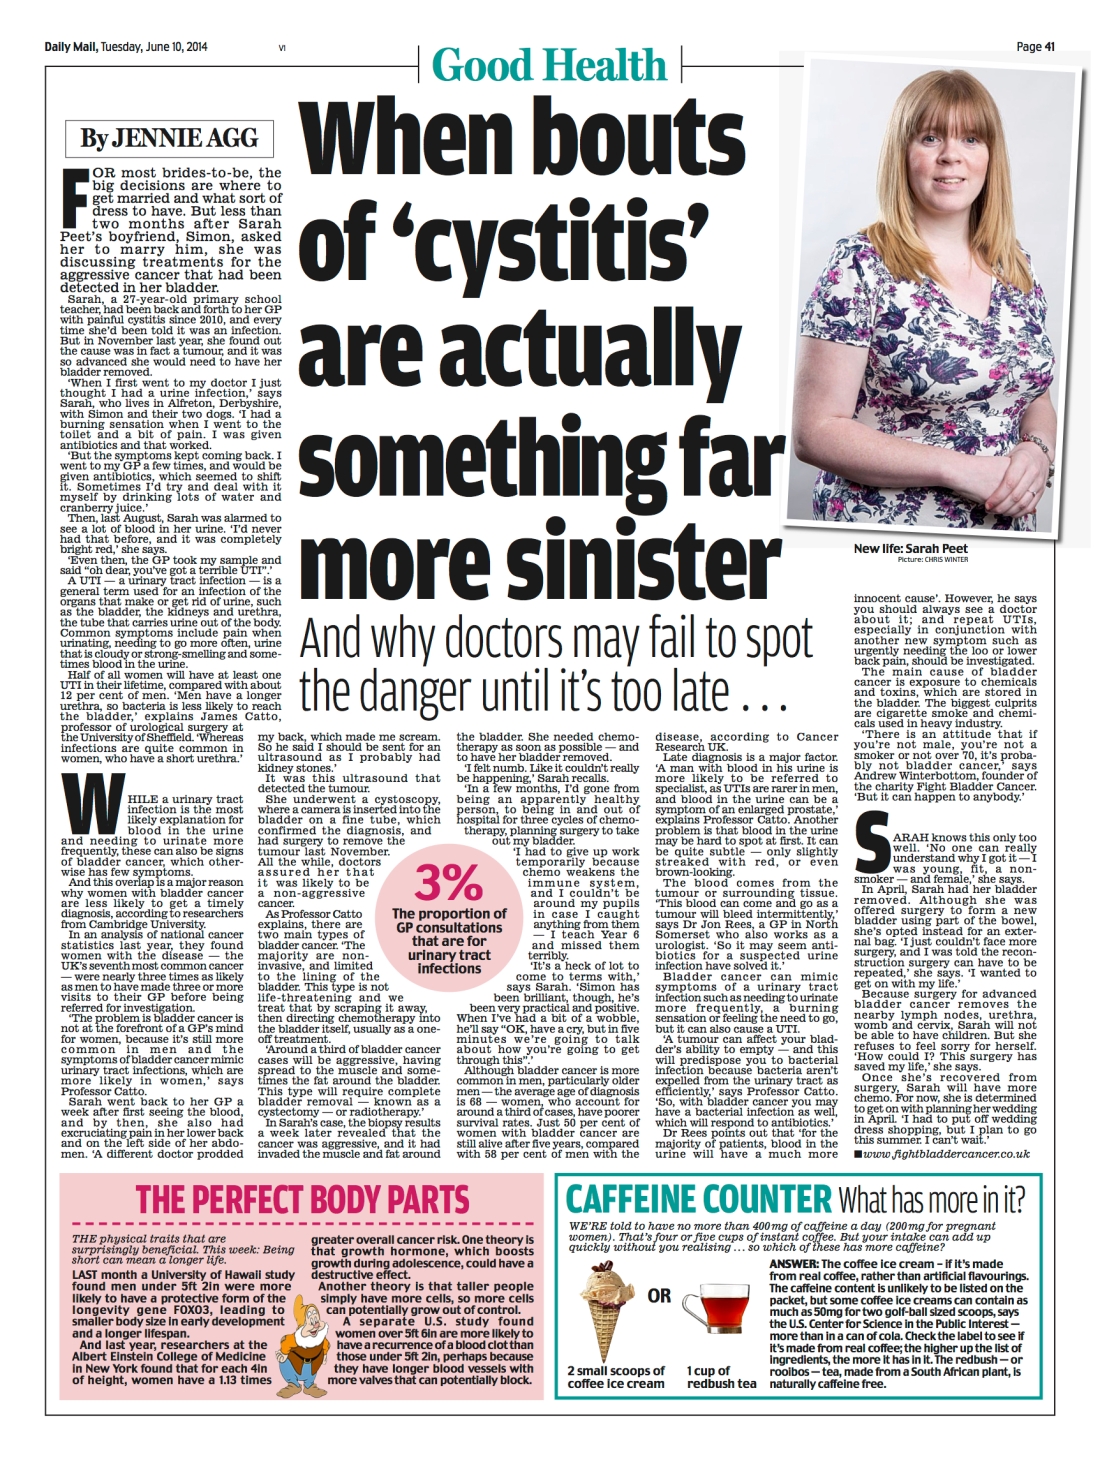 Cystitis and bladder cancer.jpg